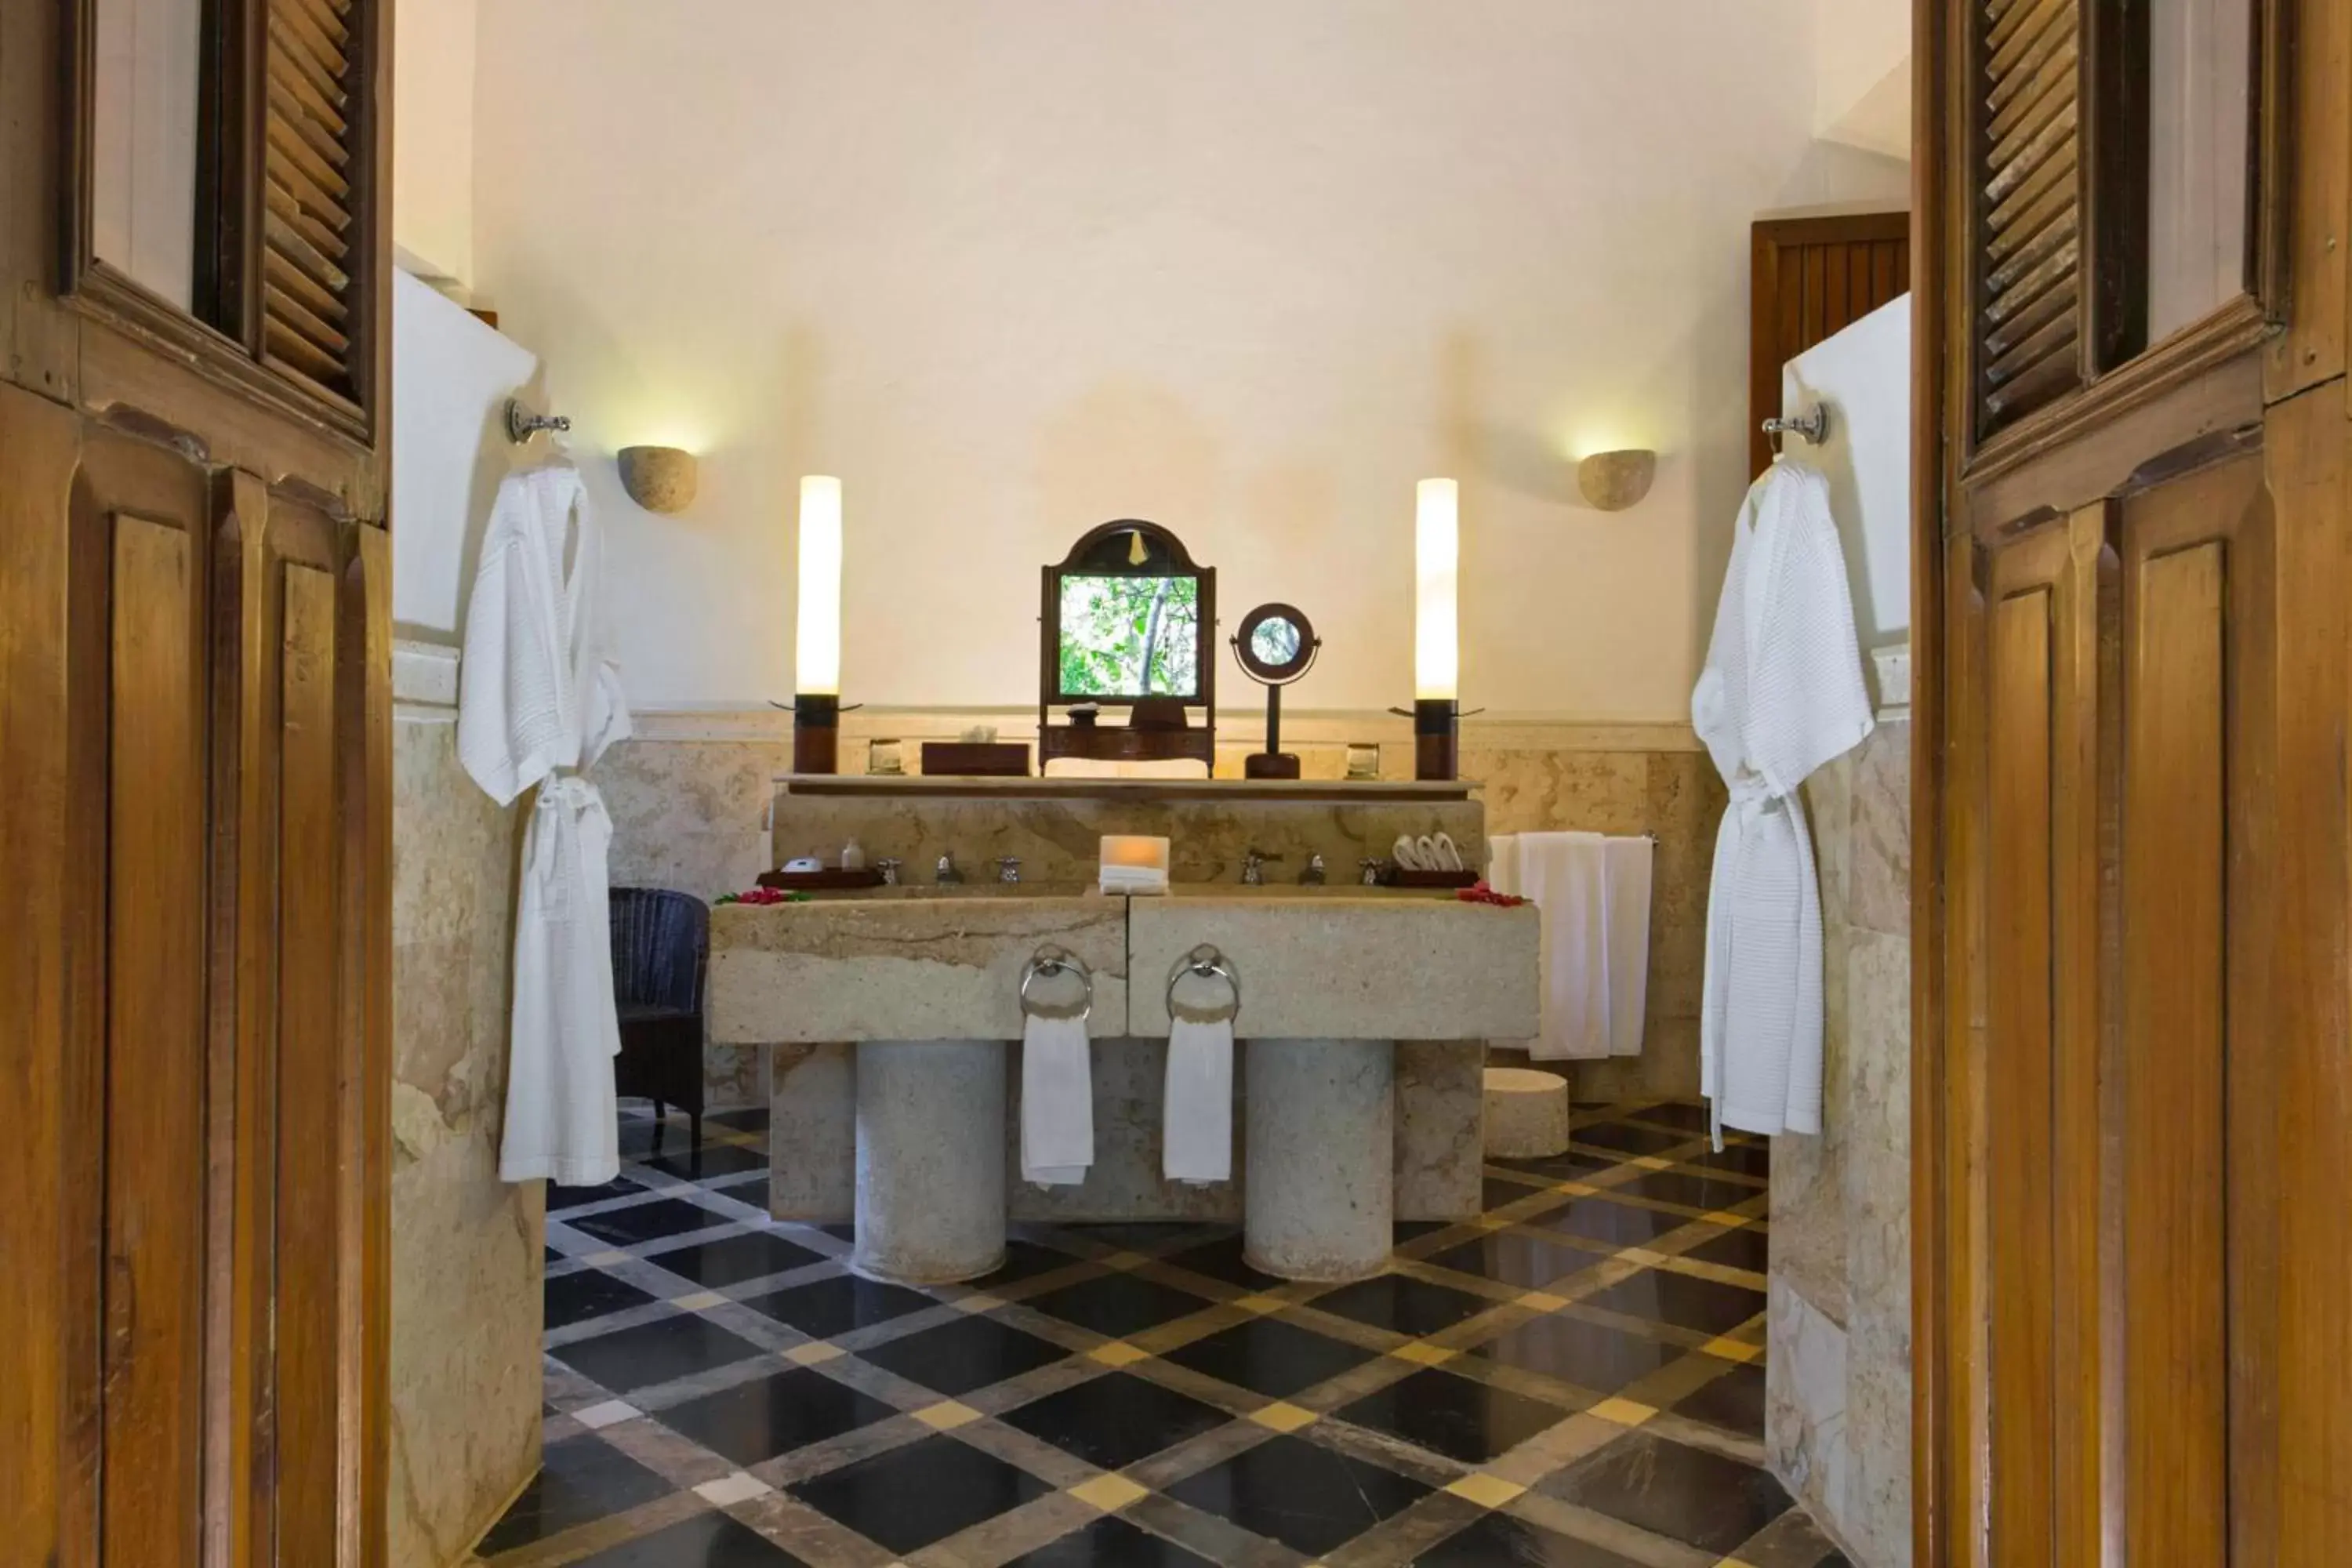 Photo of the whole room, Bathroom in Hacienda Temozon